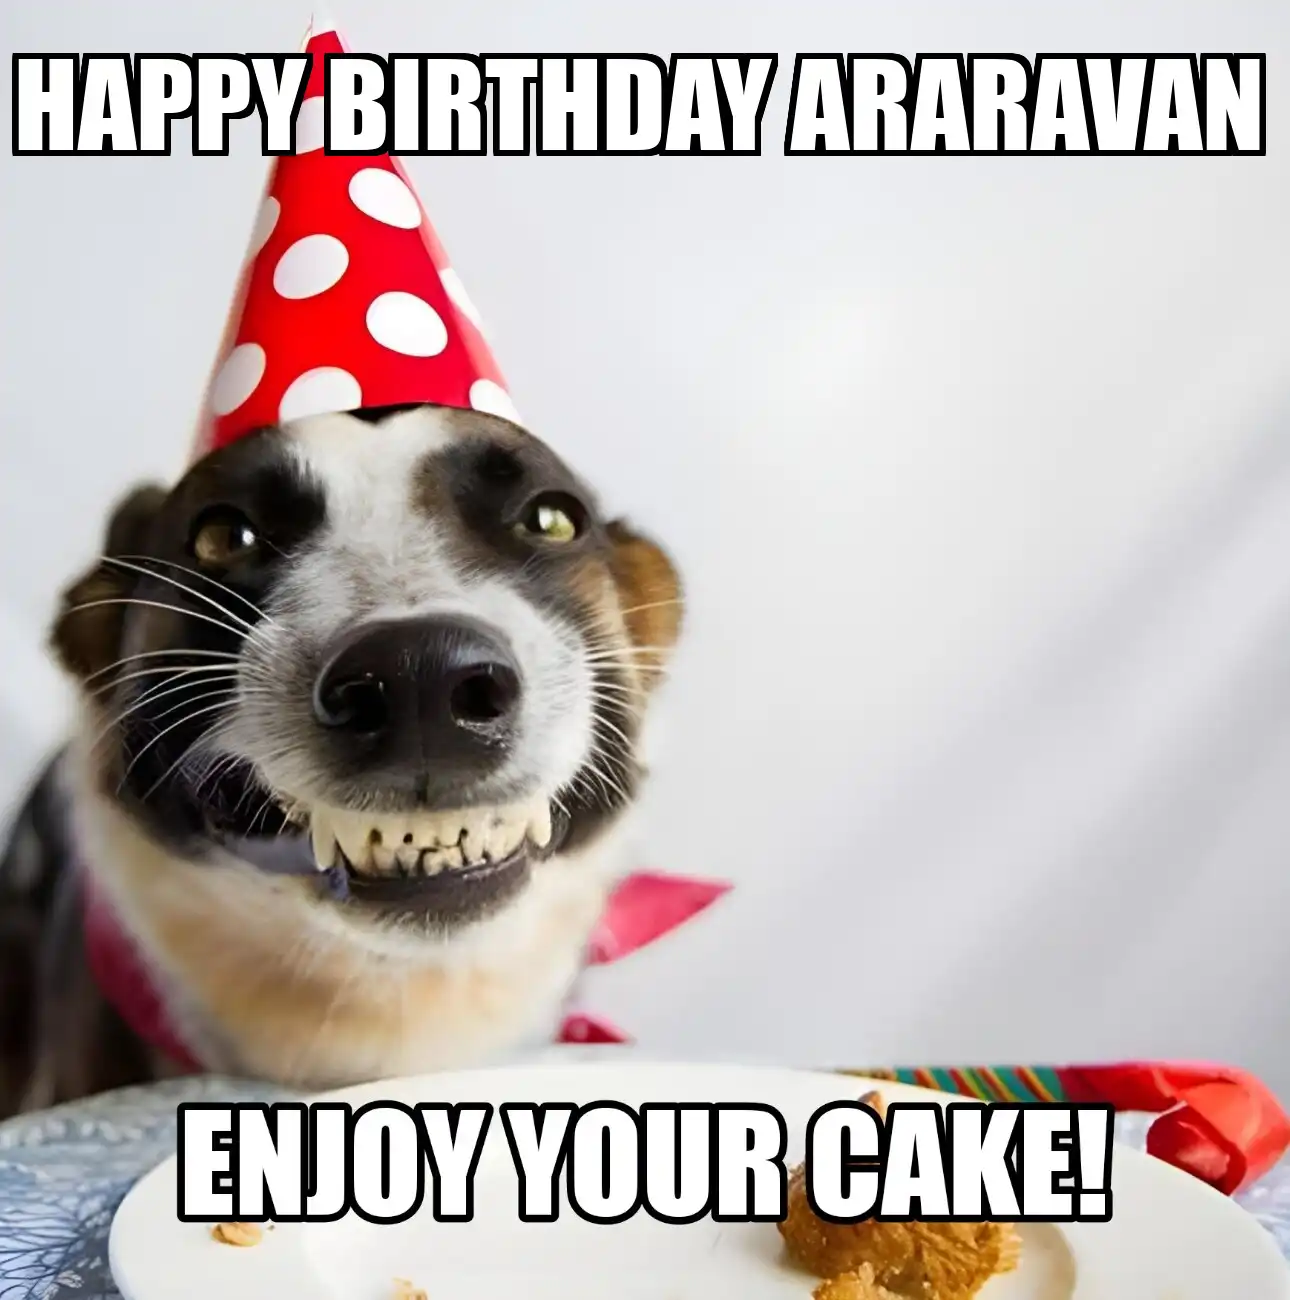 Happy Birthday Araravan Enjoy Your Cake Dog Meme